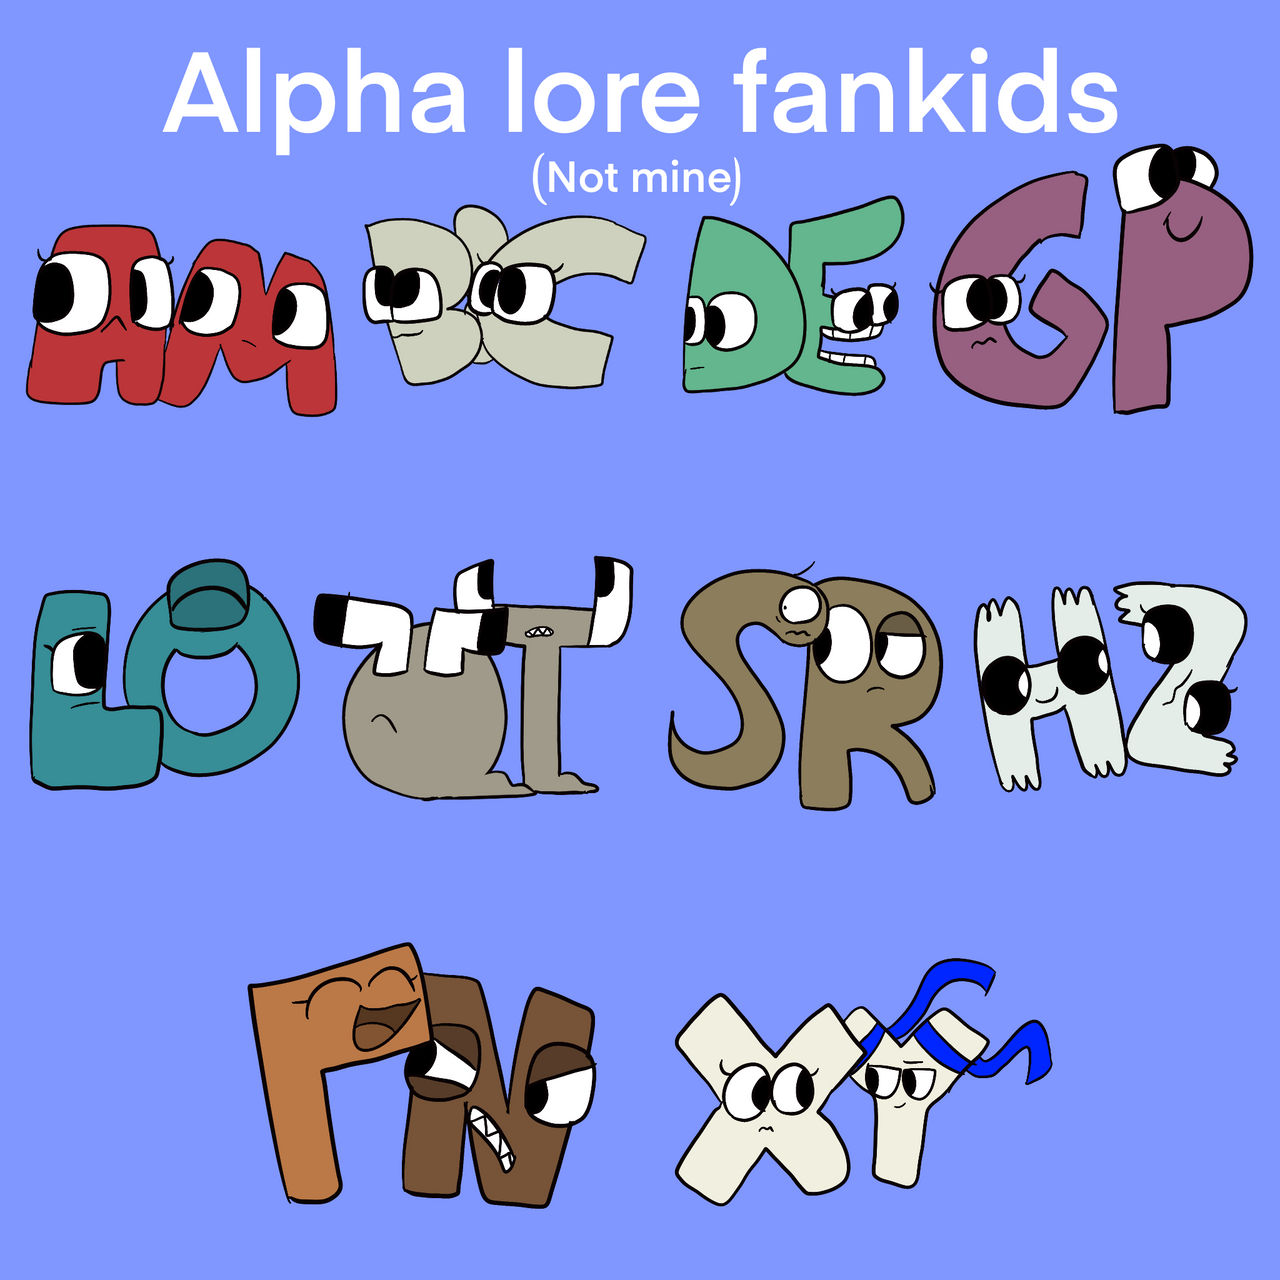 Alphabet lore fankids by KumaDraws334 on DeviantArt